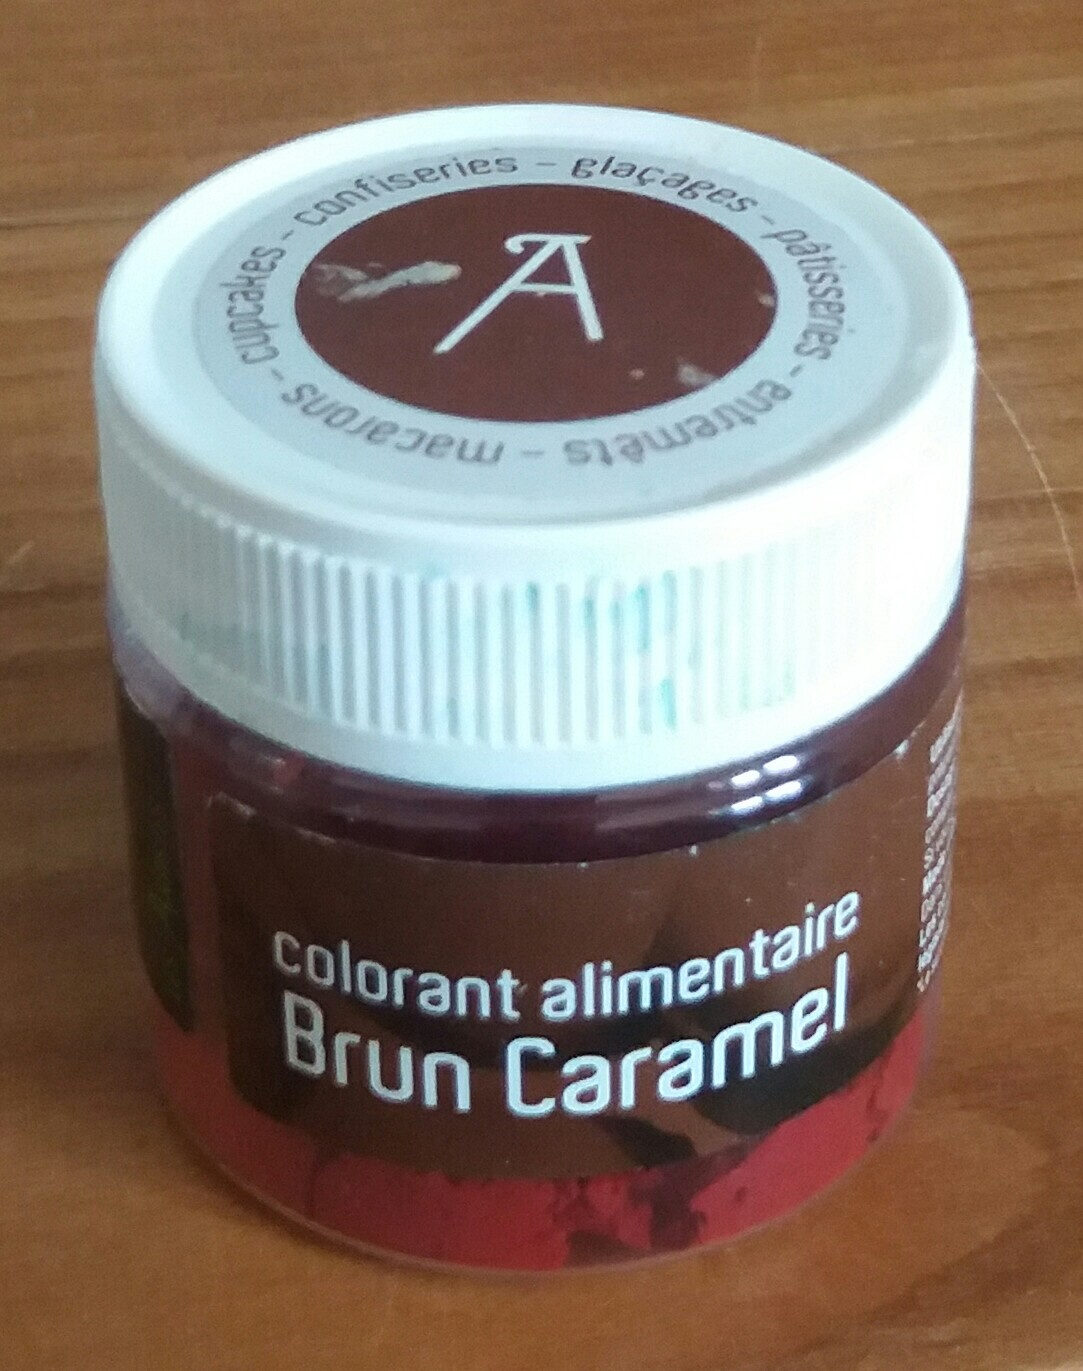 Colorant alimentaire Brun caramel - Produit